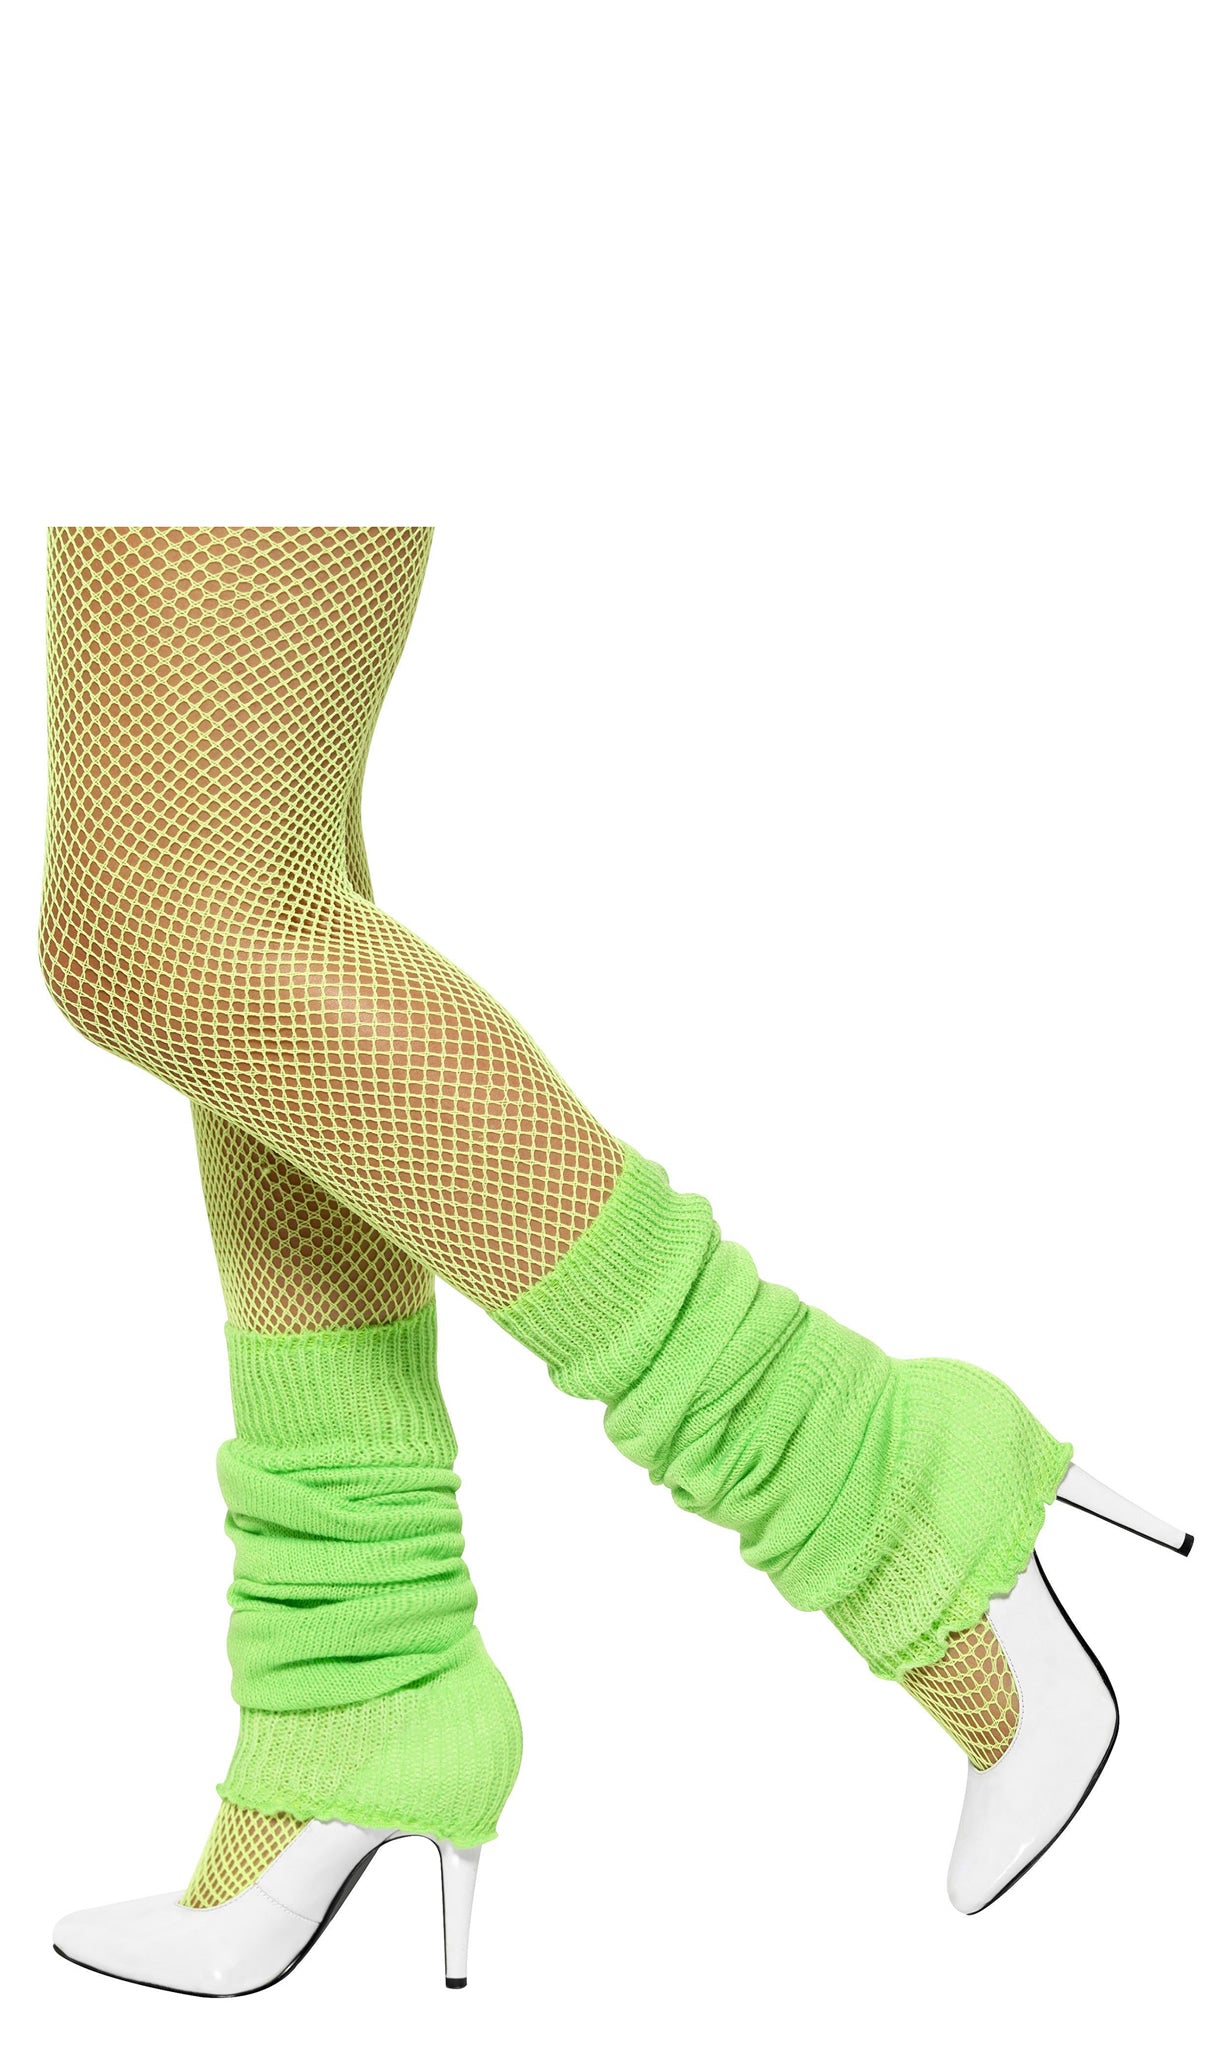 Neon green leg warmers